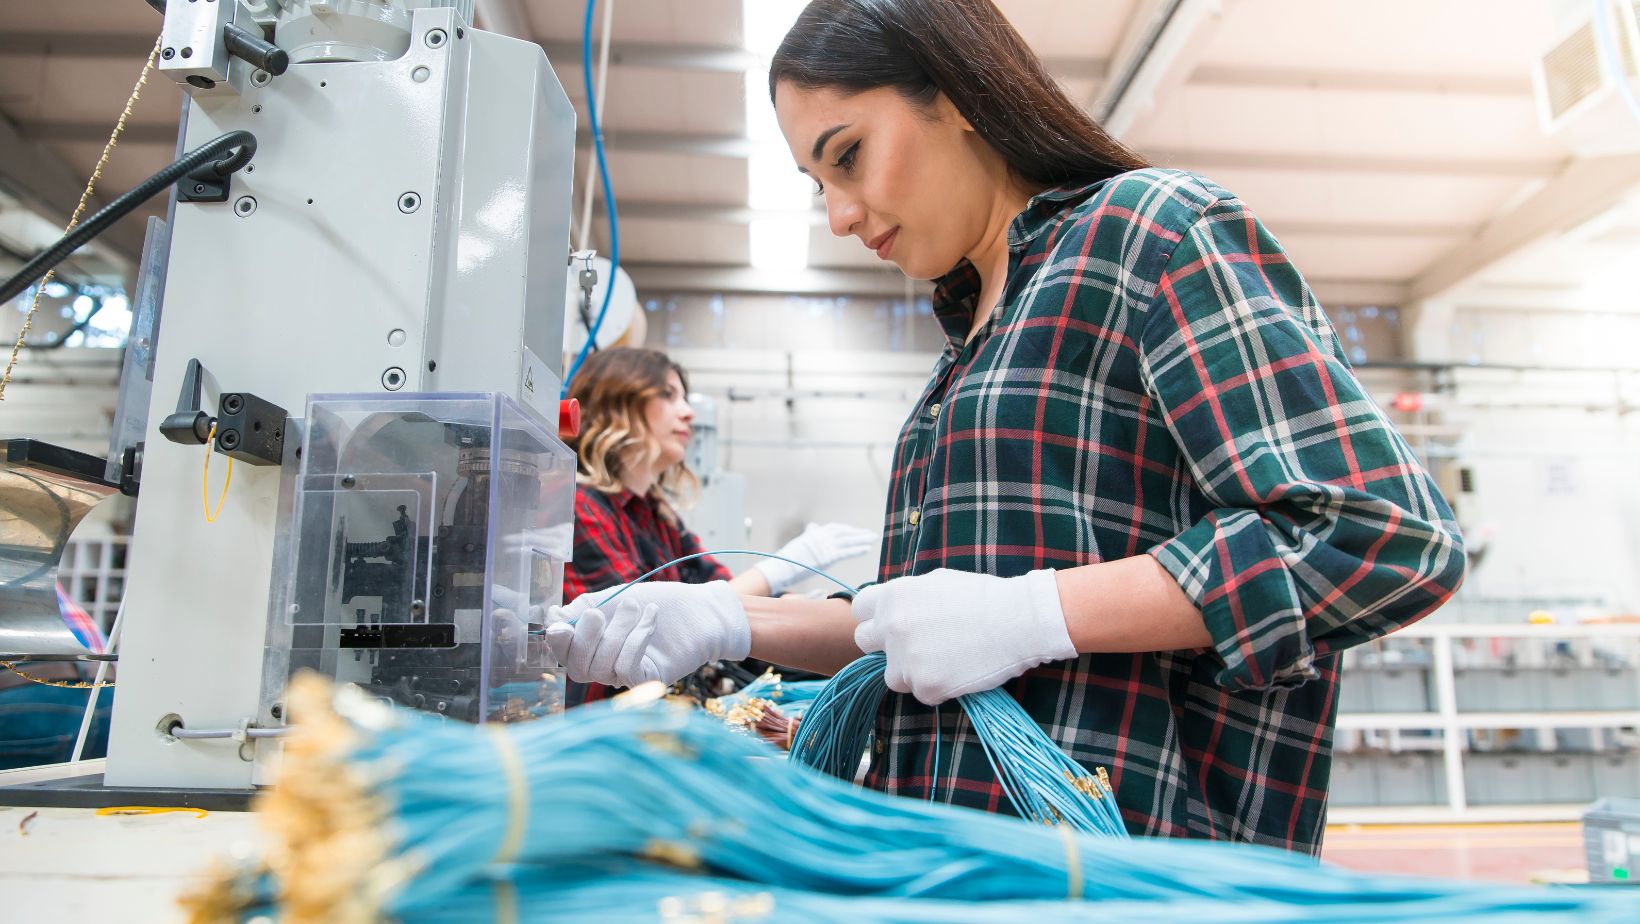 millennial hispanic woman working inside an electronics manufacturing plant